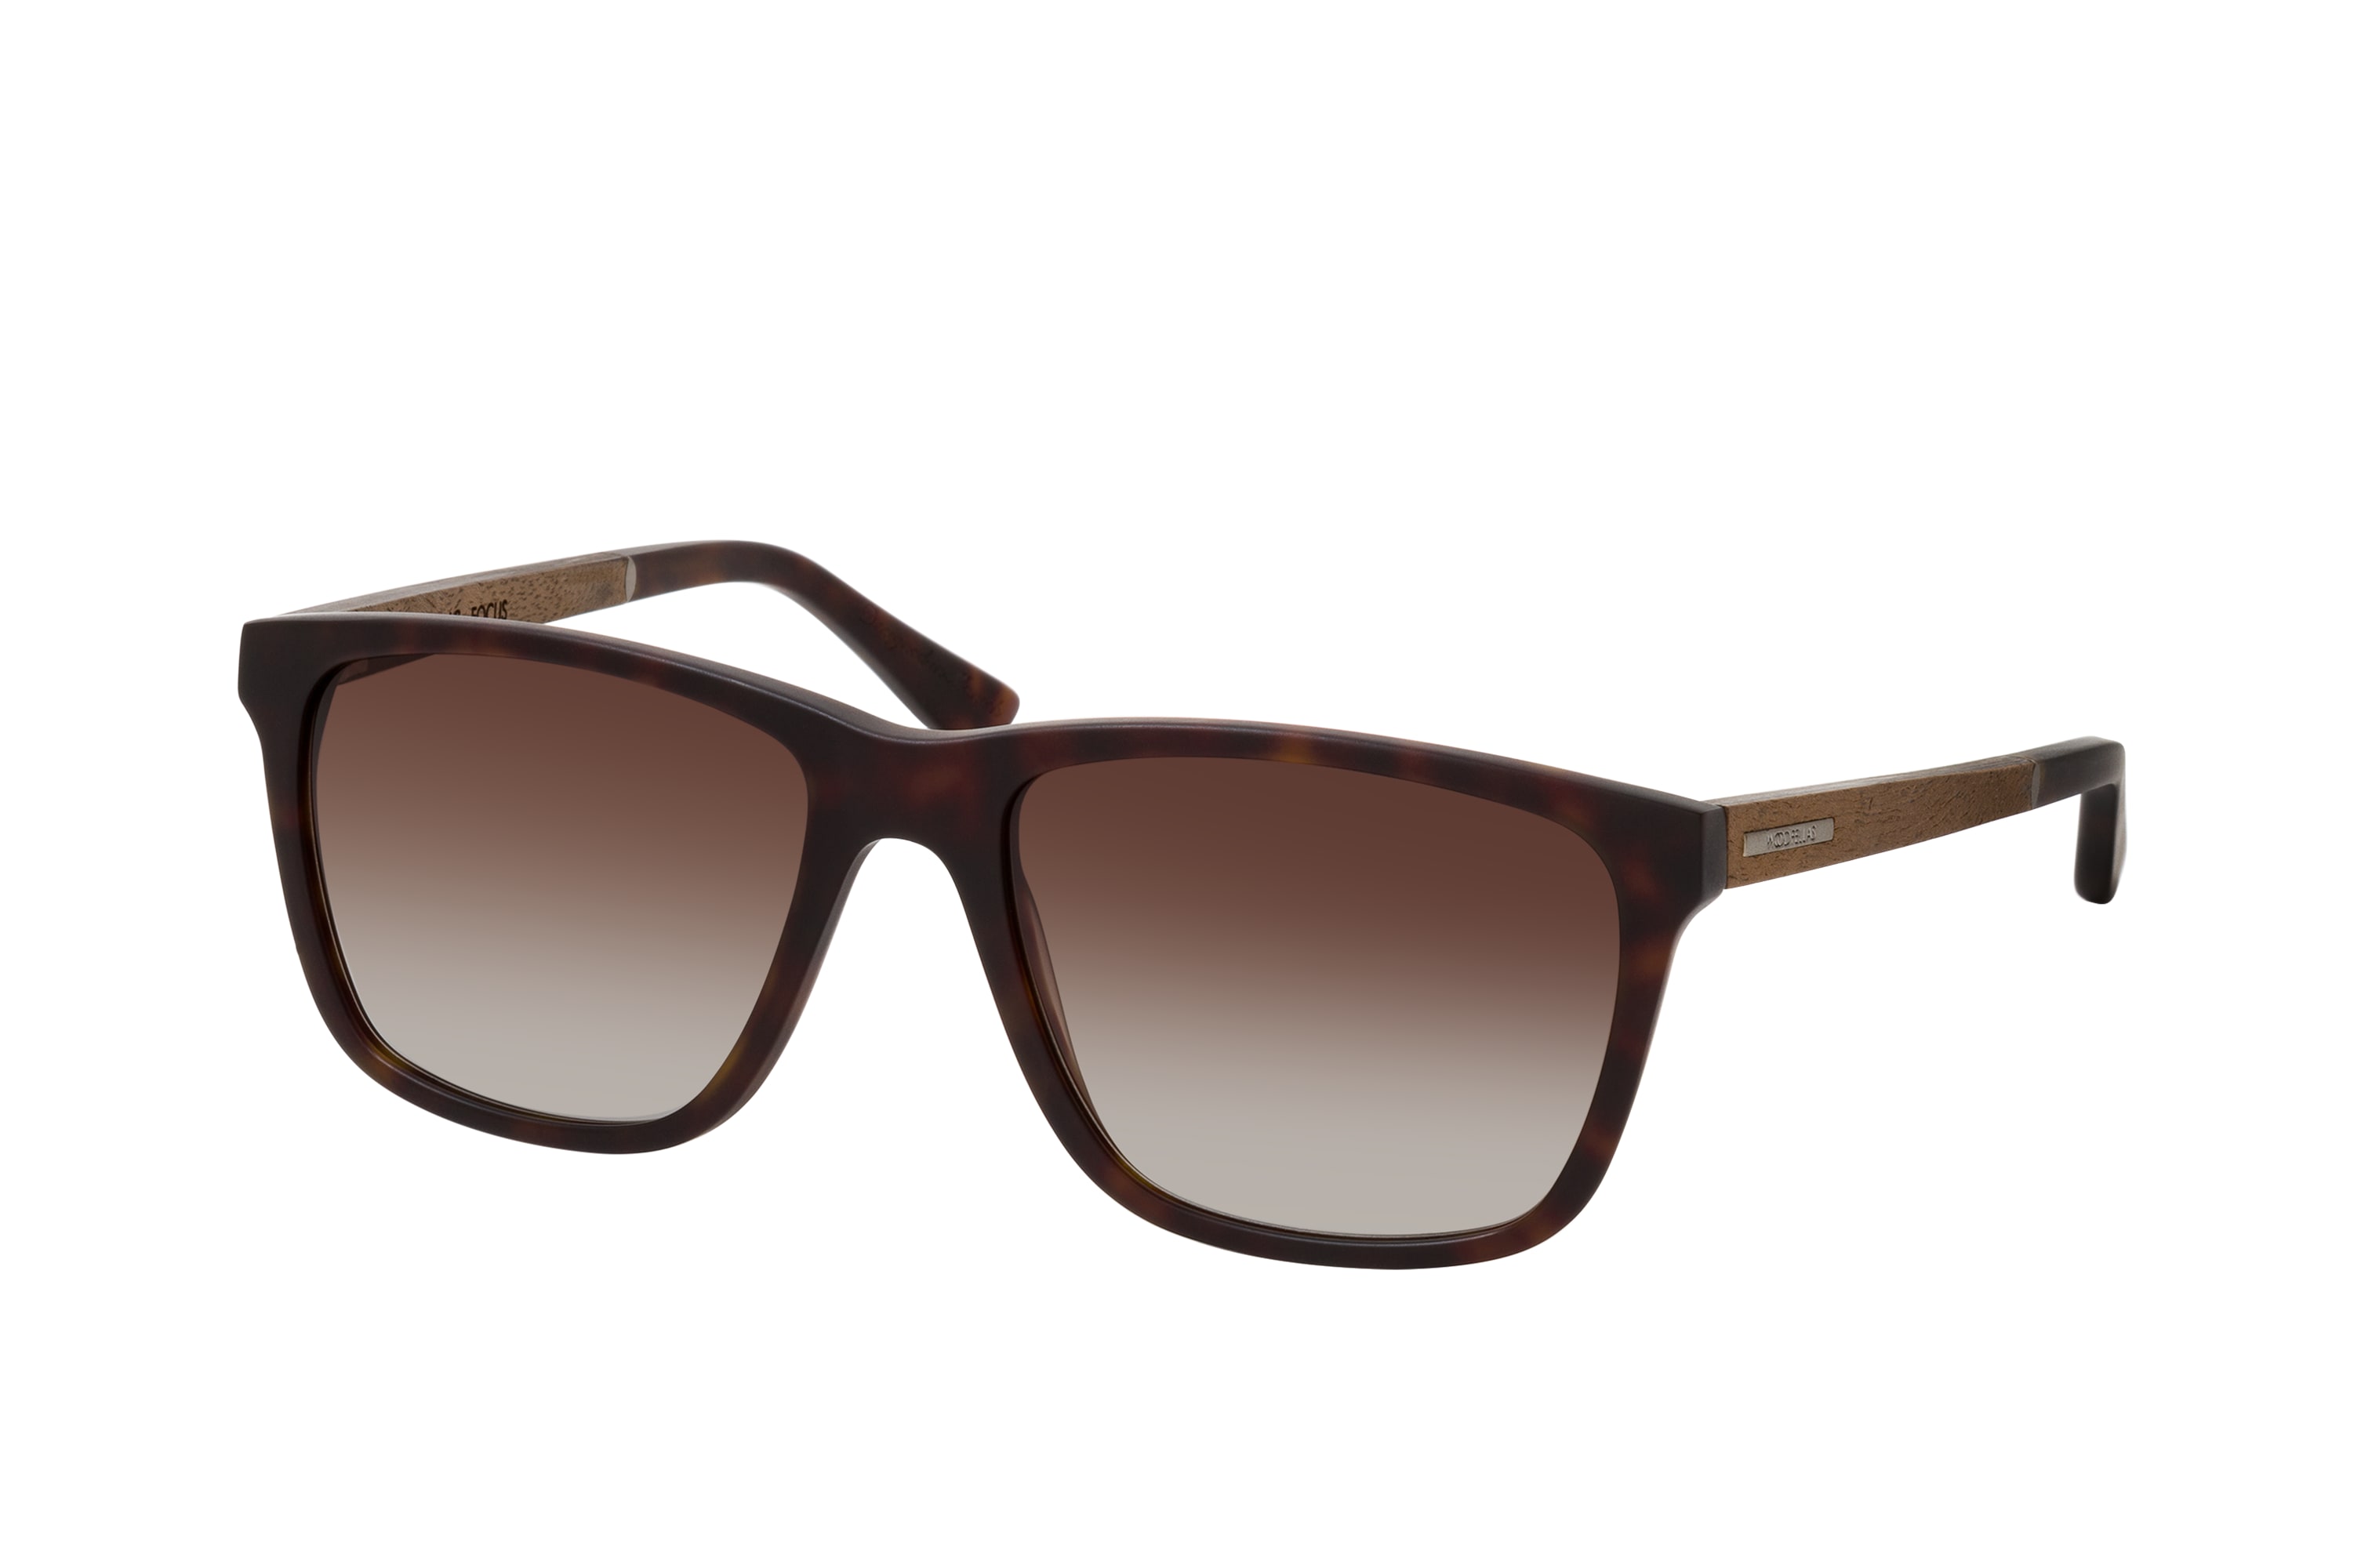 Buy WOOD FELLAS Focus 11716 6868 Sunglasses